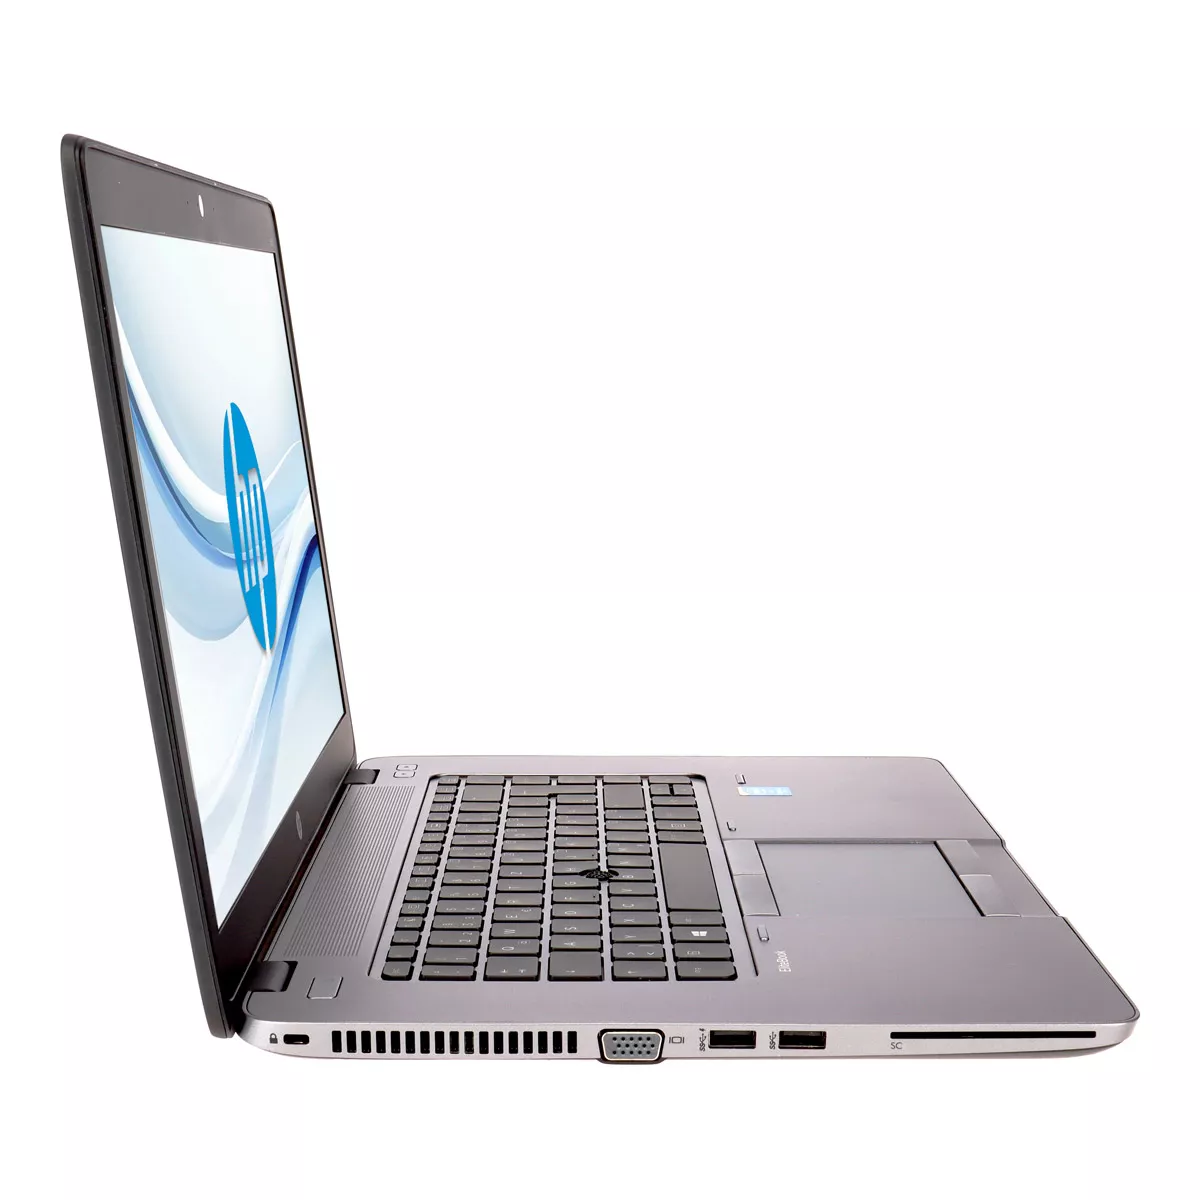 HP EliteBook 850 G2 Core i5 5300U Full-HD 240 GB SSD Webcam A+